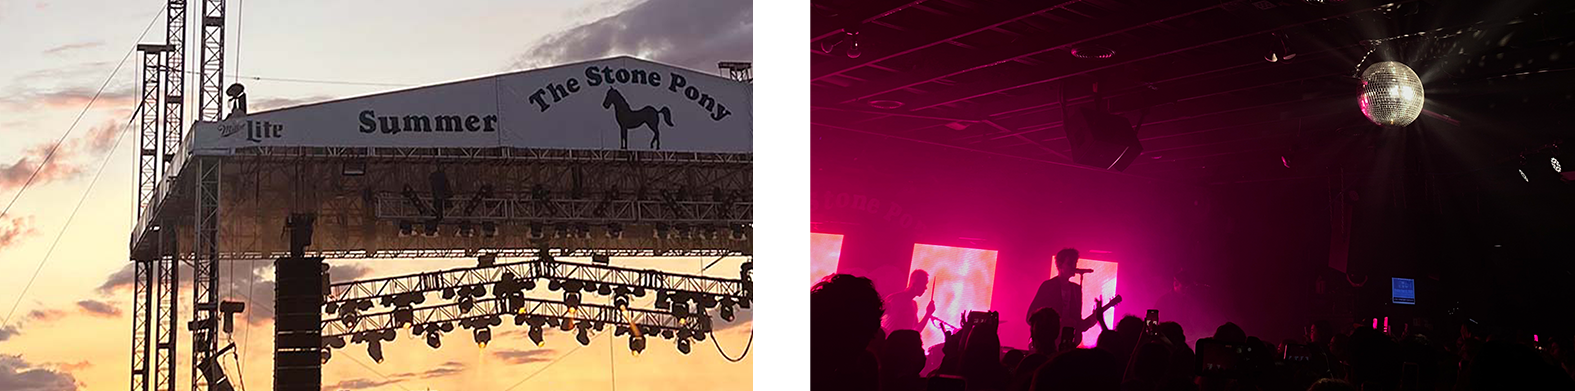 The Stone Pony Summer Stage, Asbury Park, NJ